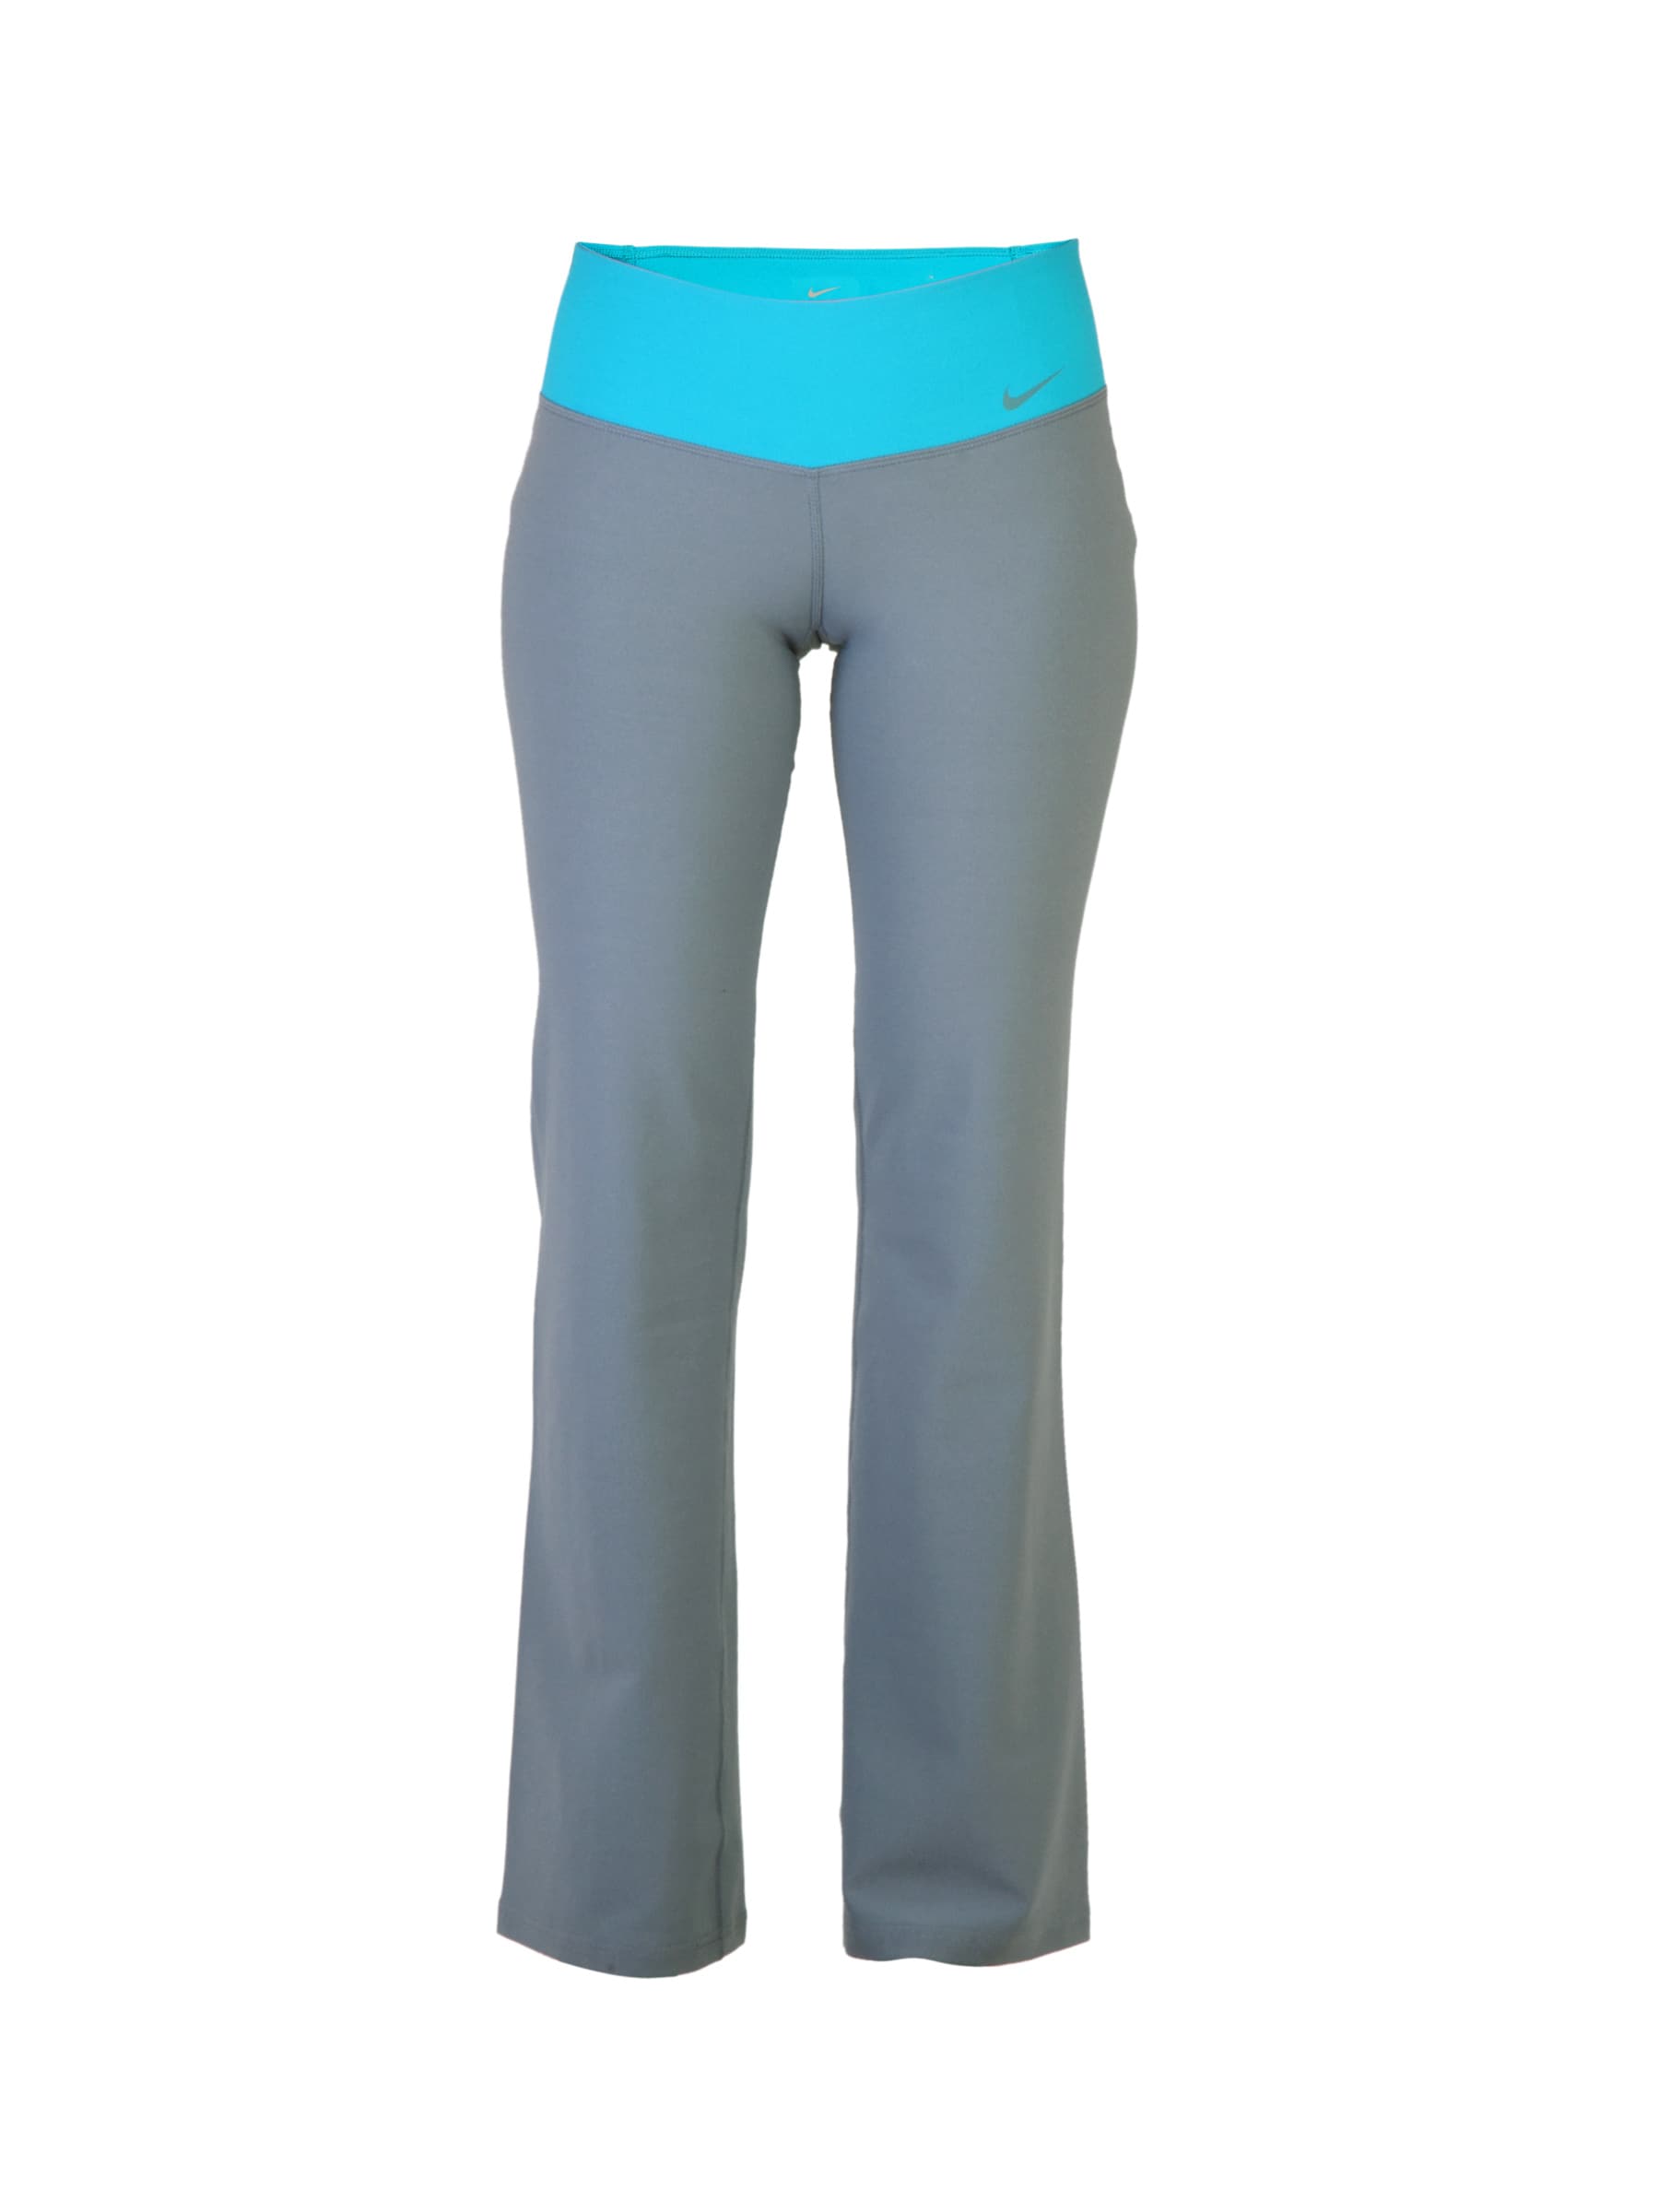 Nike Women Solid Grey Track Pants